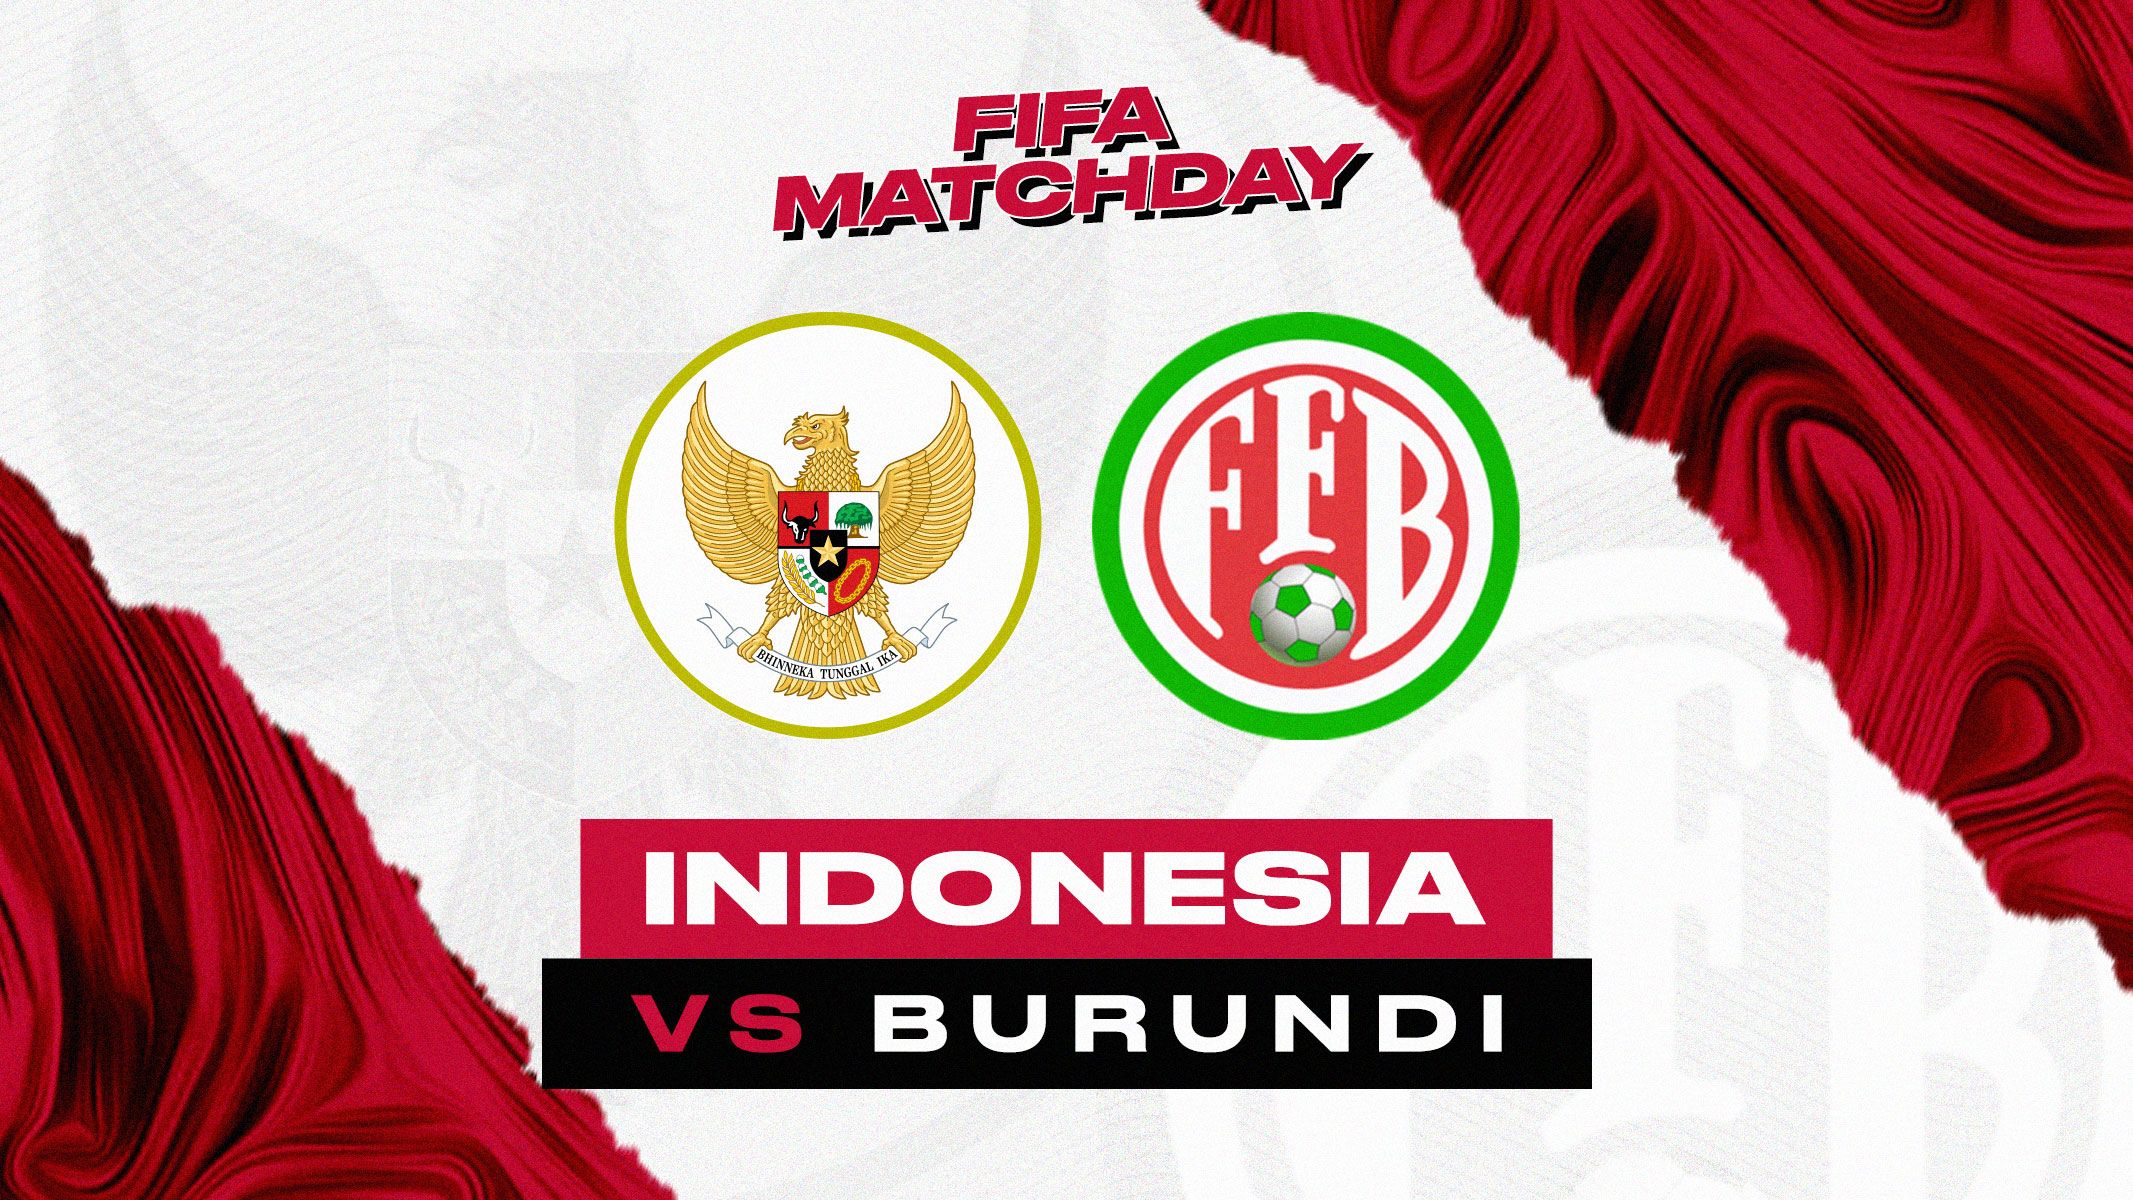 Prediksi dan Link Live Streaming Indonesia vs Burundi di FIFA Matchday